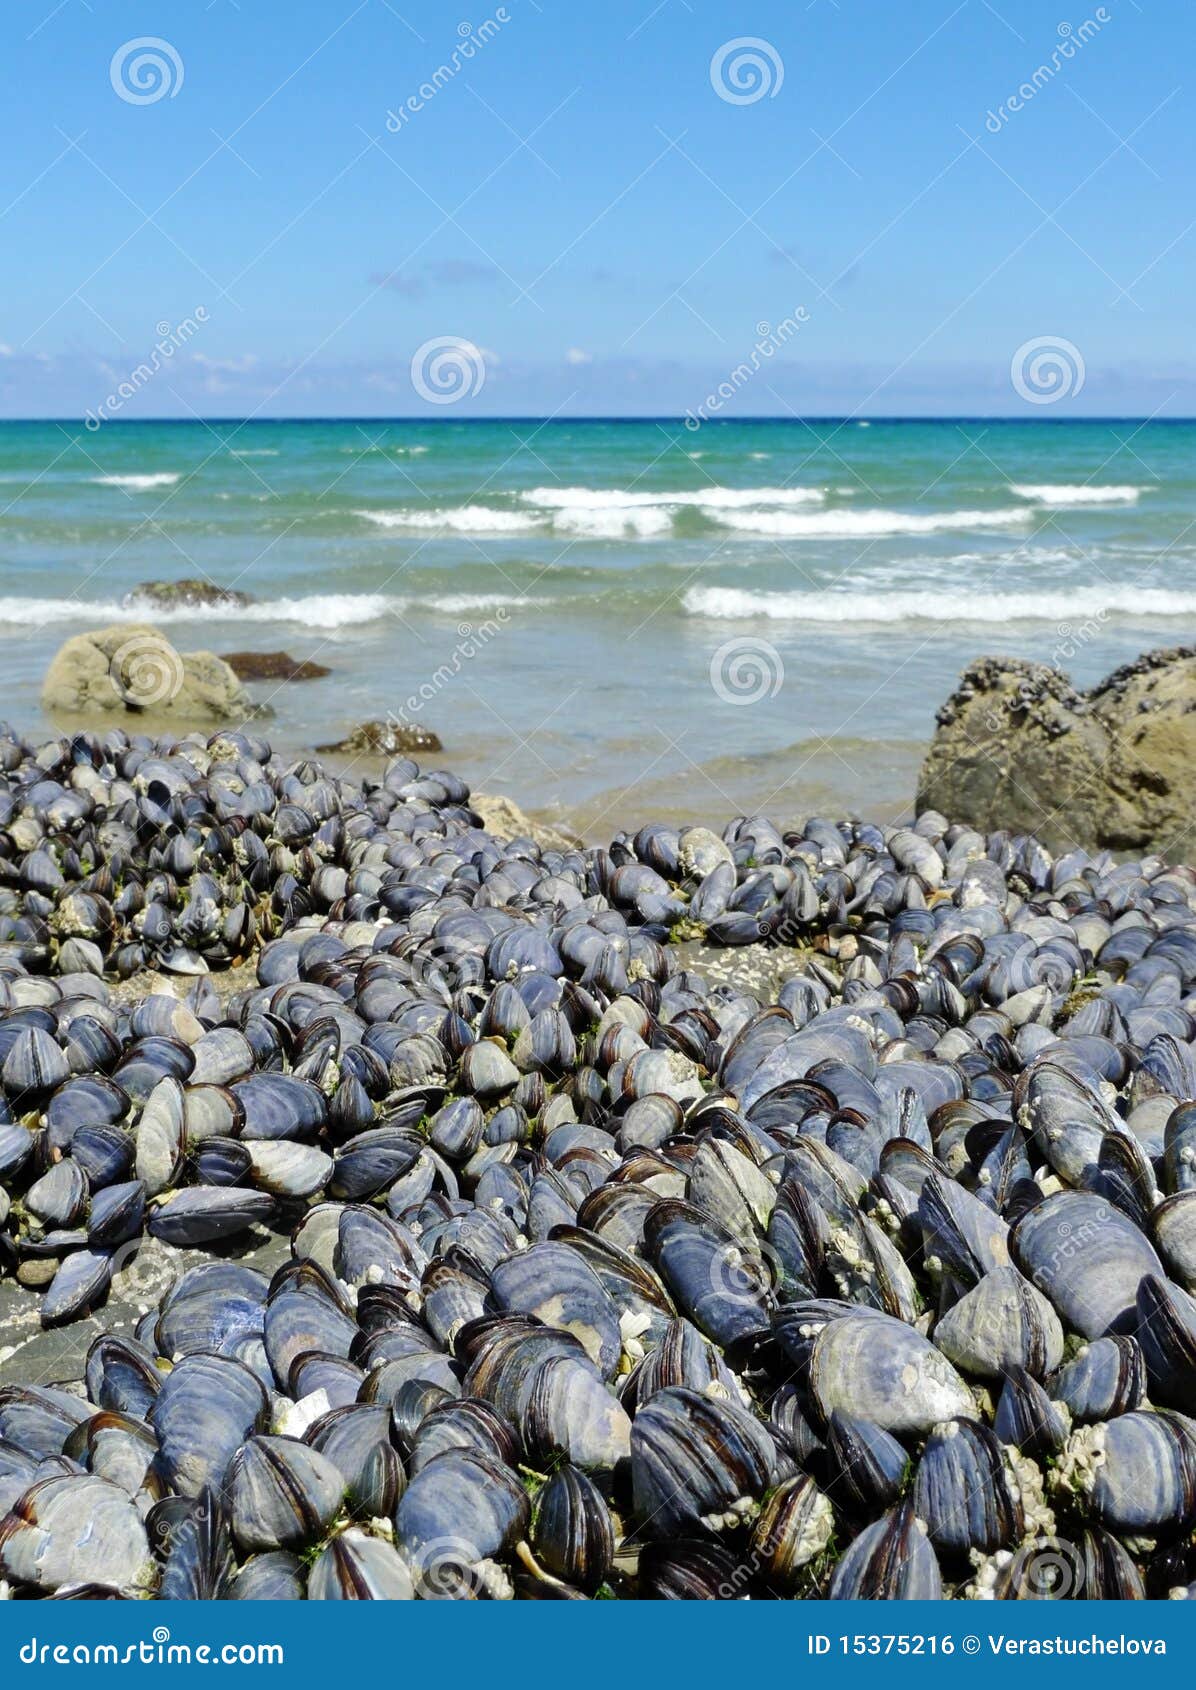 black eatable mussels on a coast